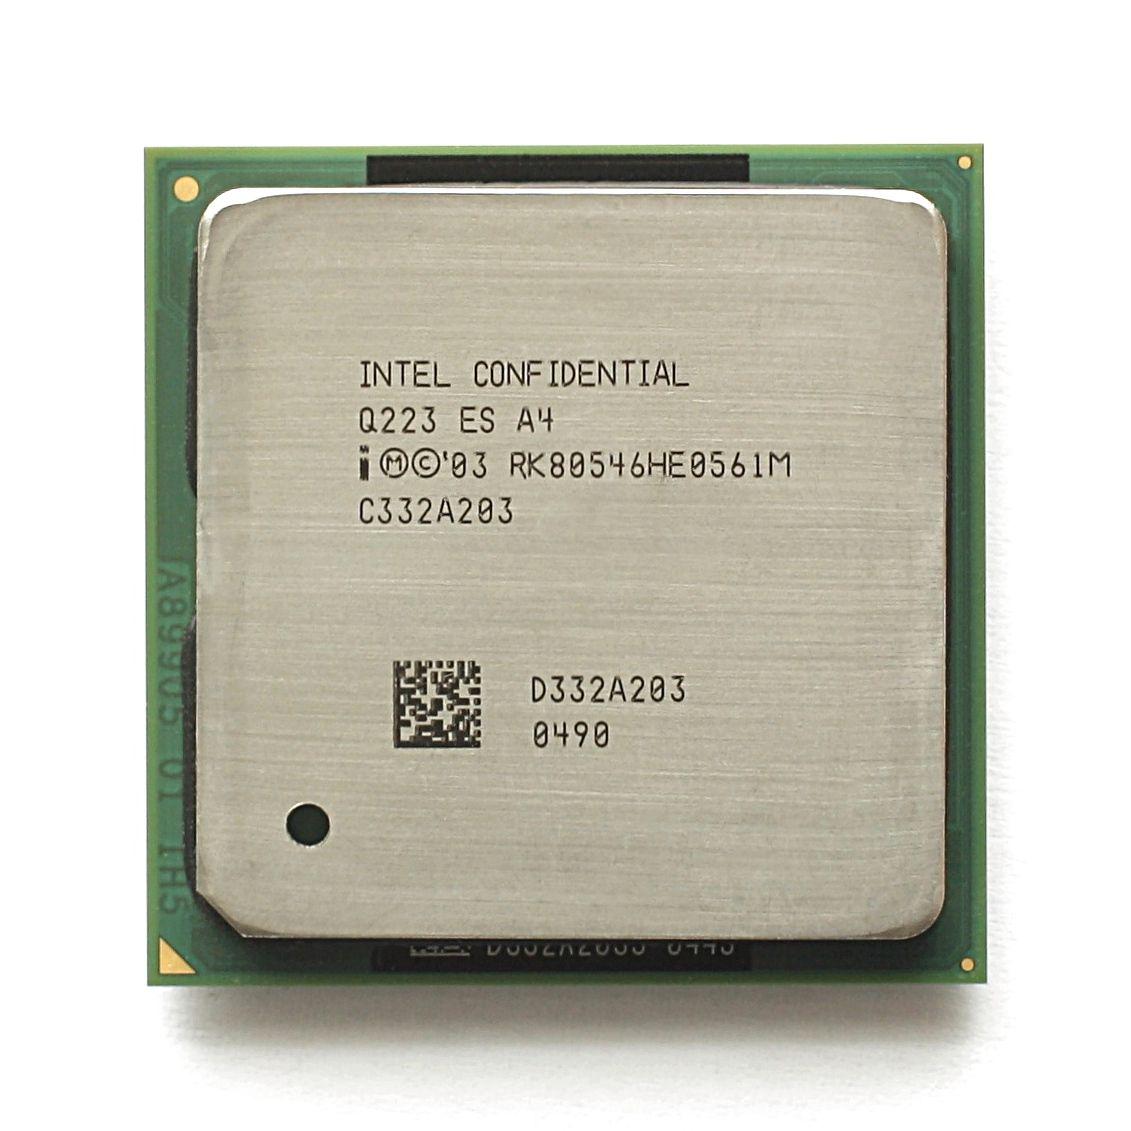 Intel Pentium 4 M Logo - File:KL Intel Mobile Pentium 4 ES.jpg - Wikimedia Commons